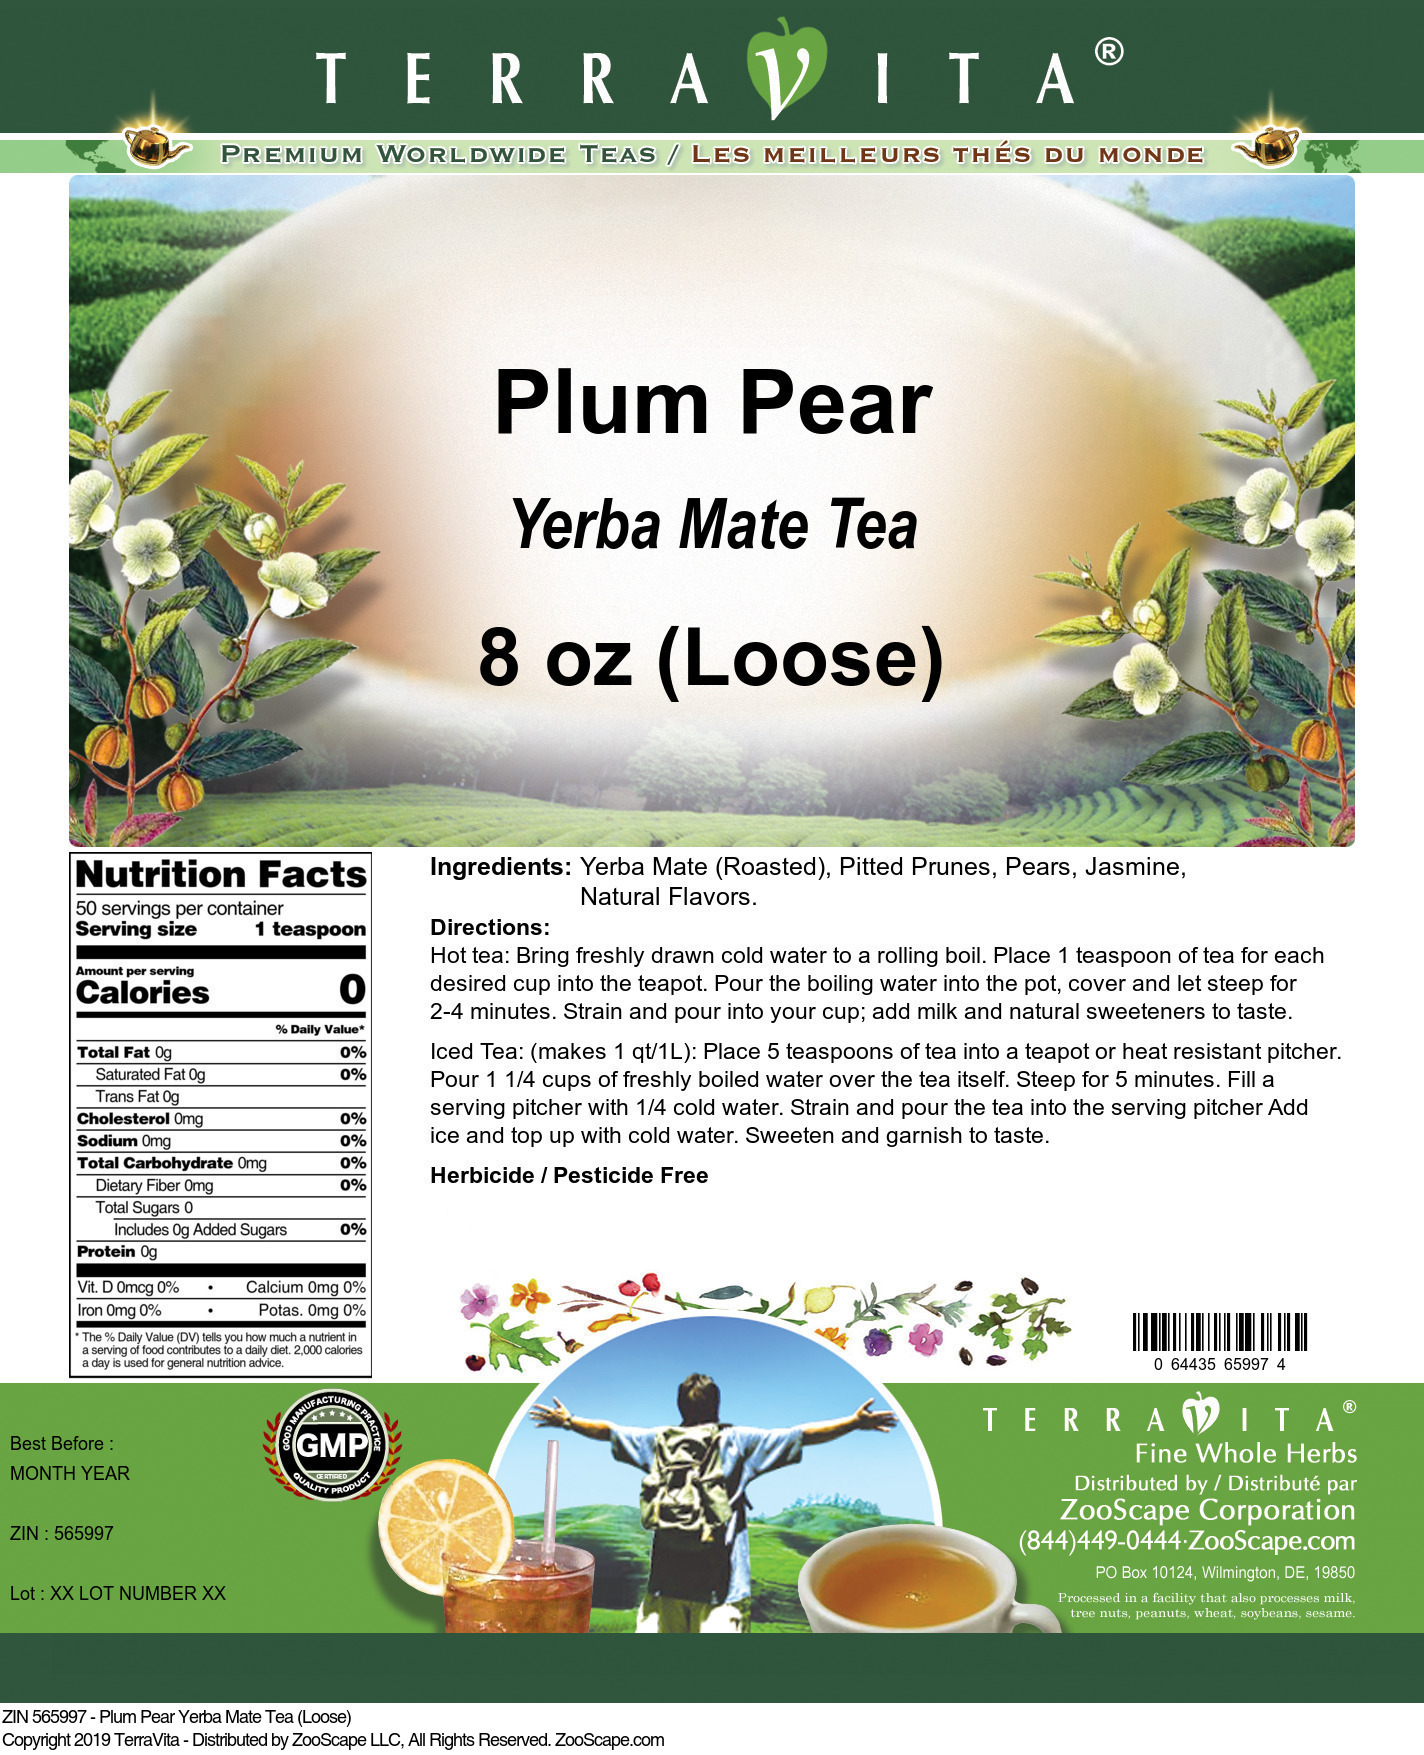 Plum Pear Yerba Mate Tea (Loose) - Label